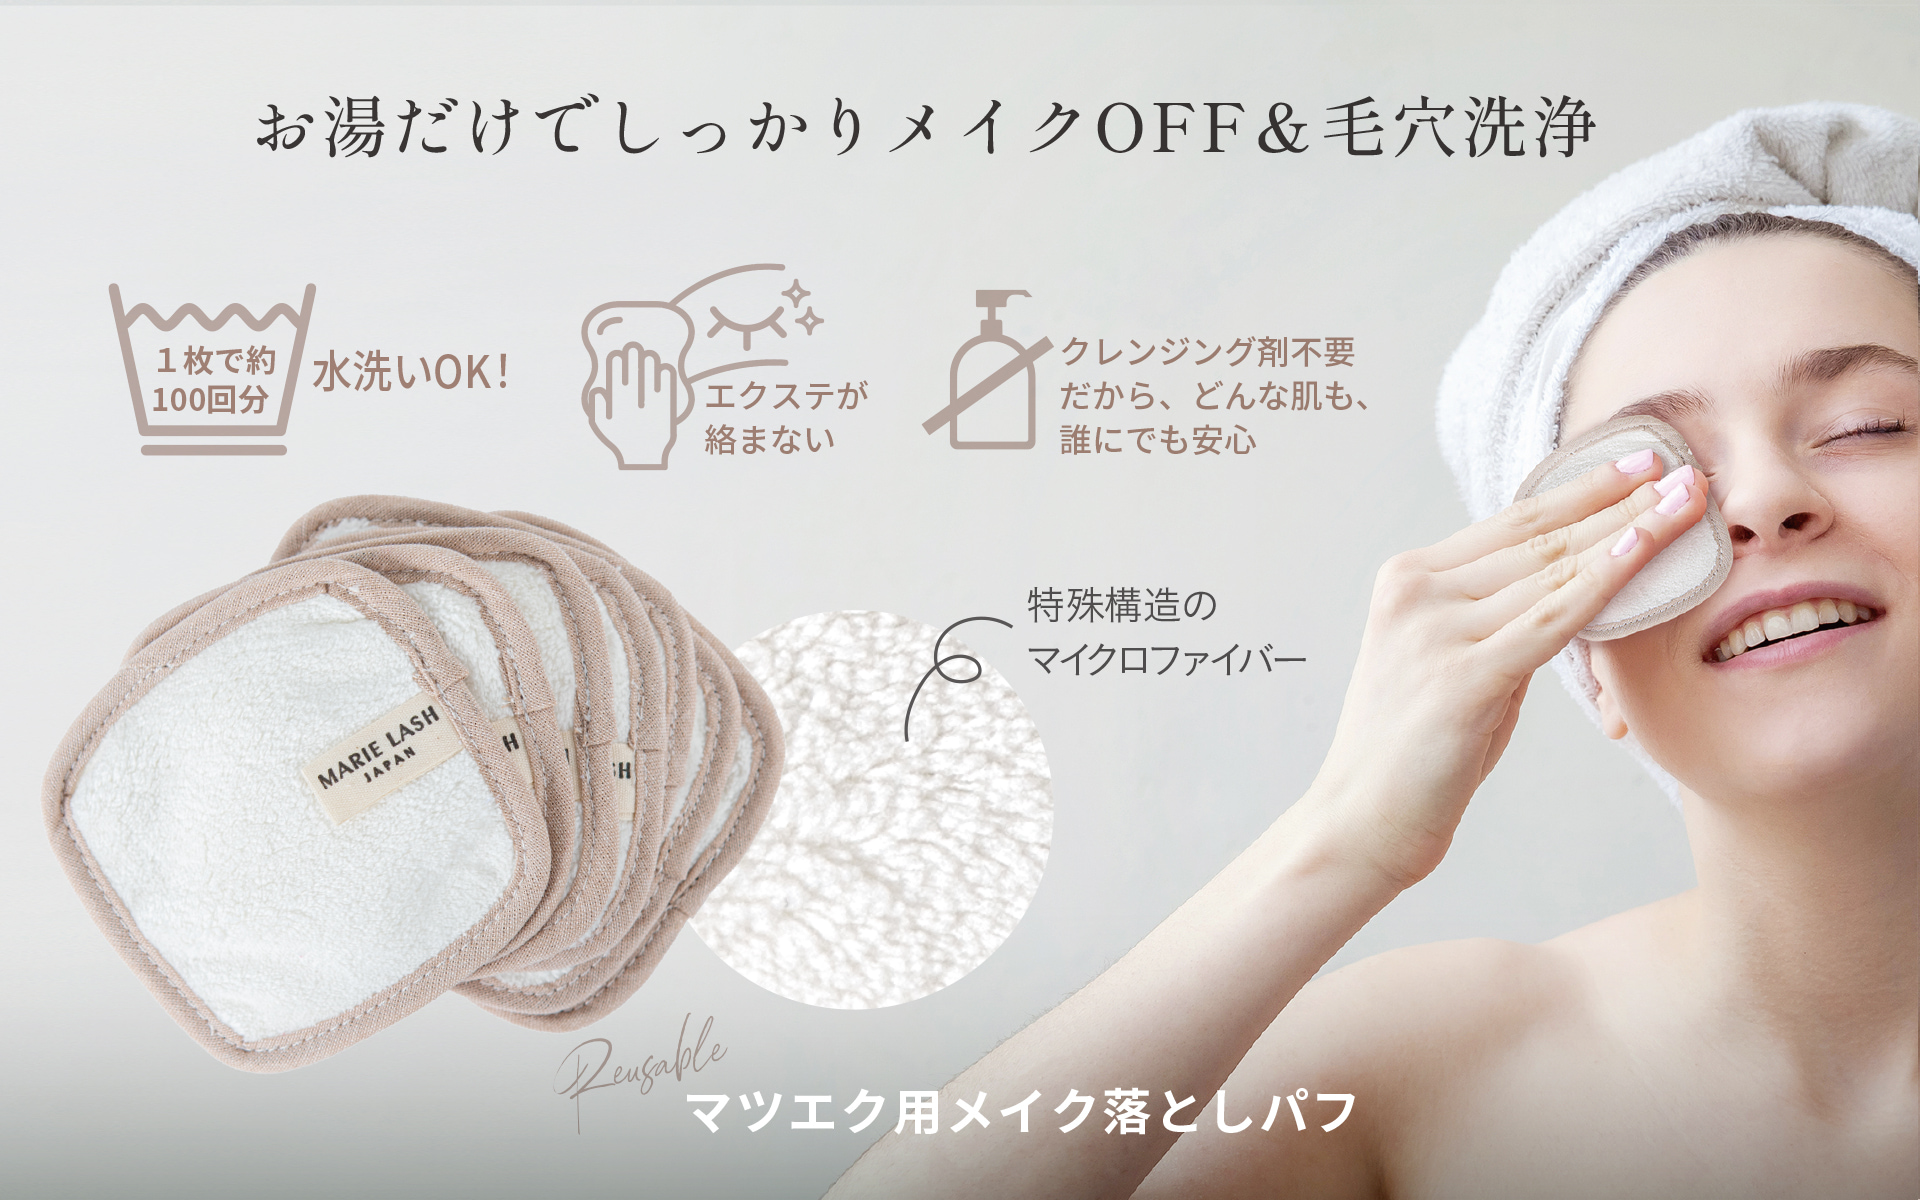 MARIE LASH JAPAN reusable makeup remover pads